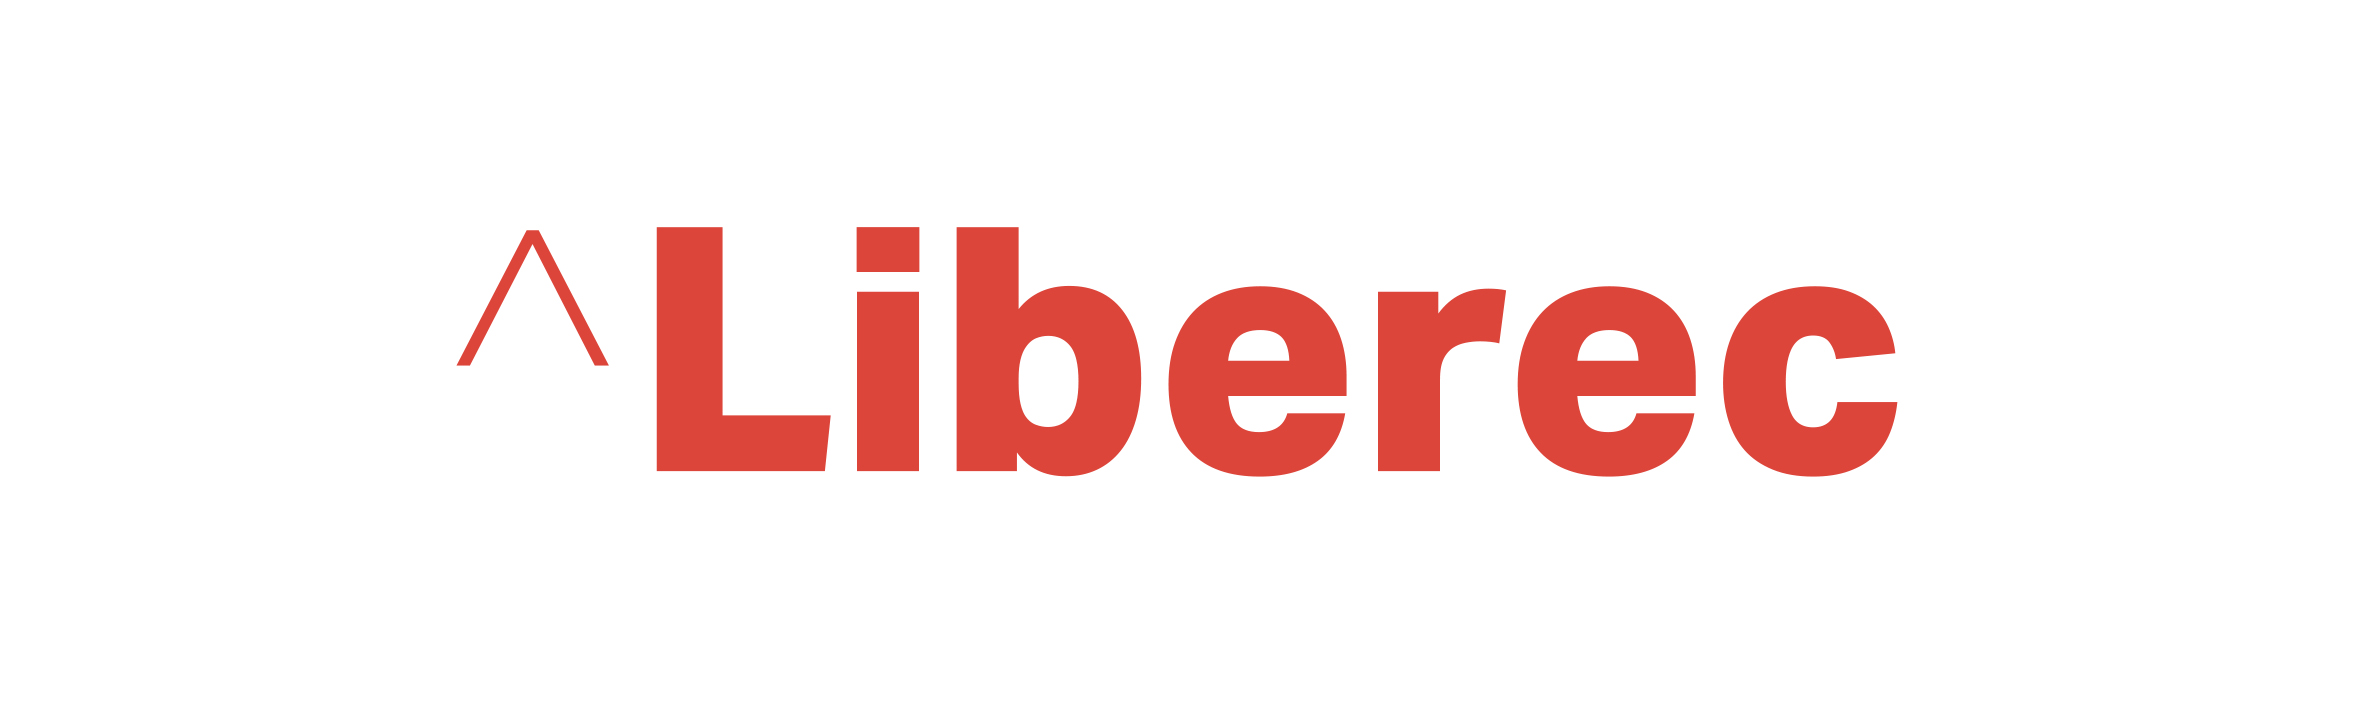 Liberec logo zakladni varianta RGB